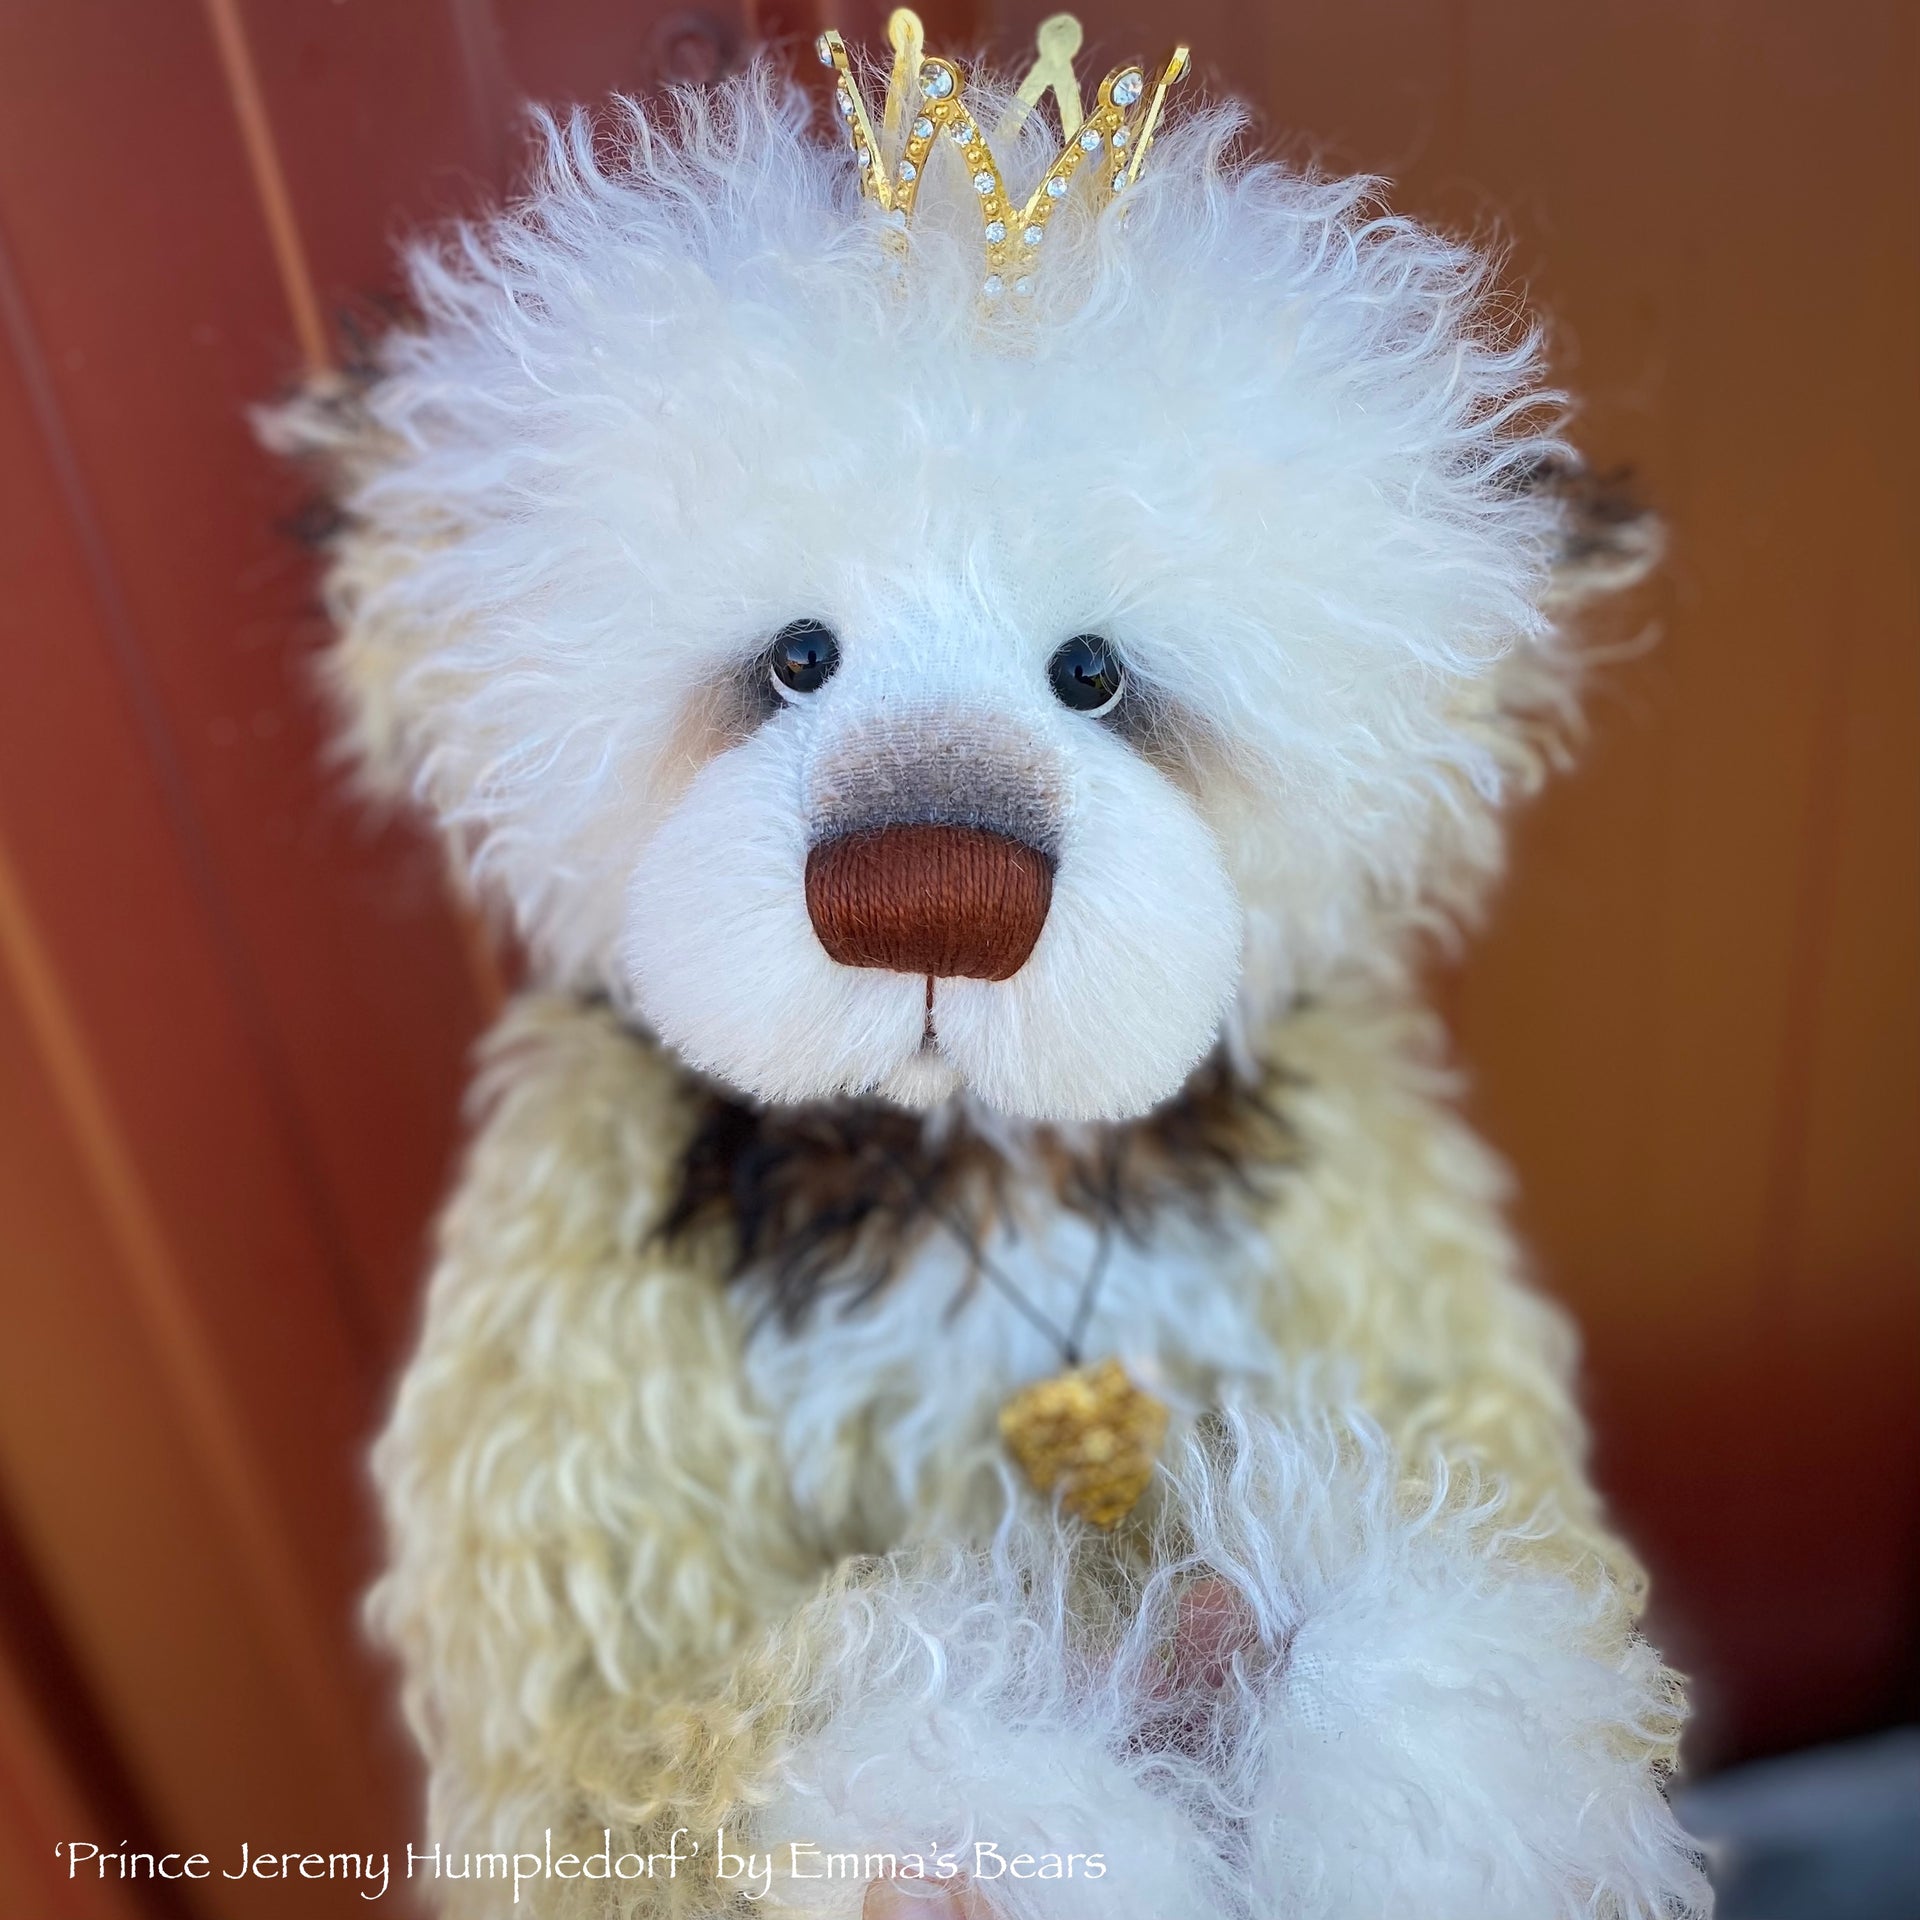 Prince Jeremy Humpledorf - 15" curlylocks mohair Artist Bear by Emma's Bears - OOAK